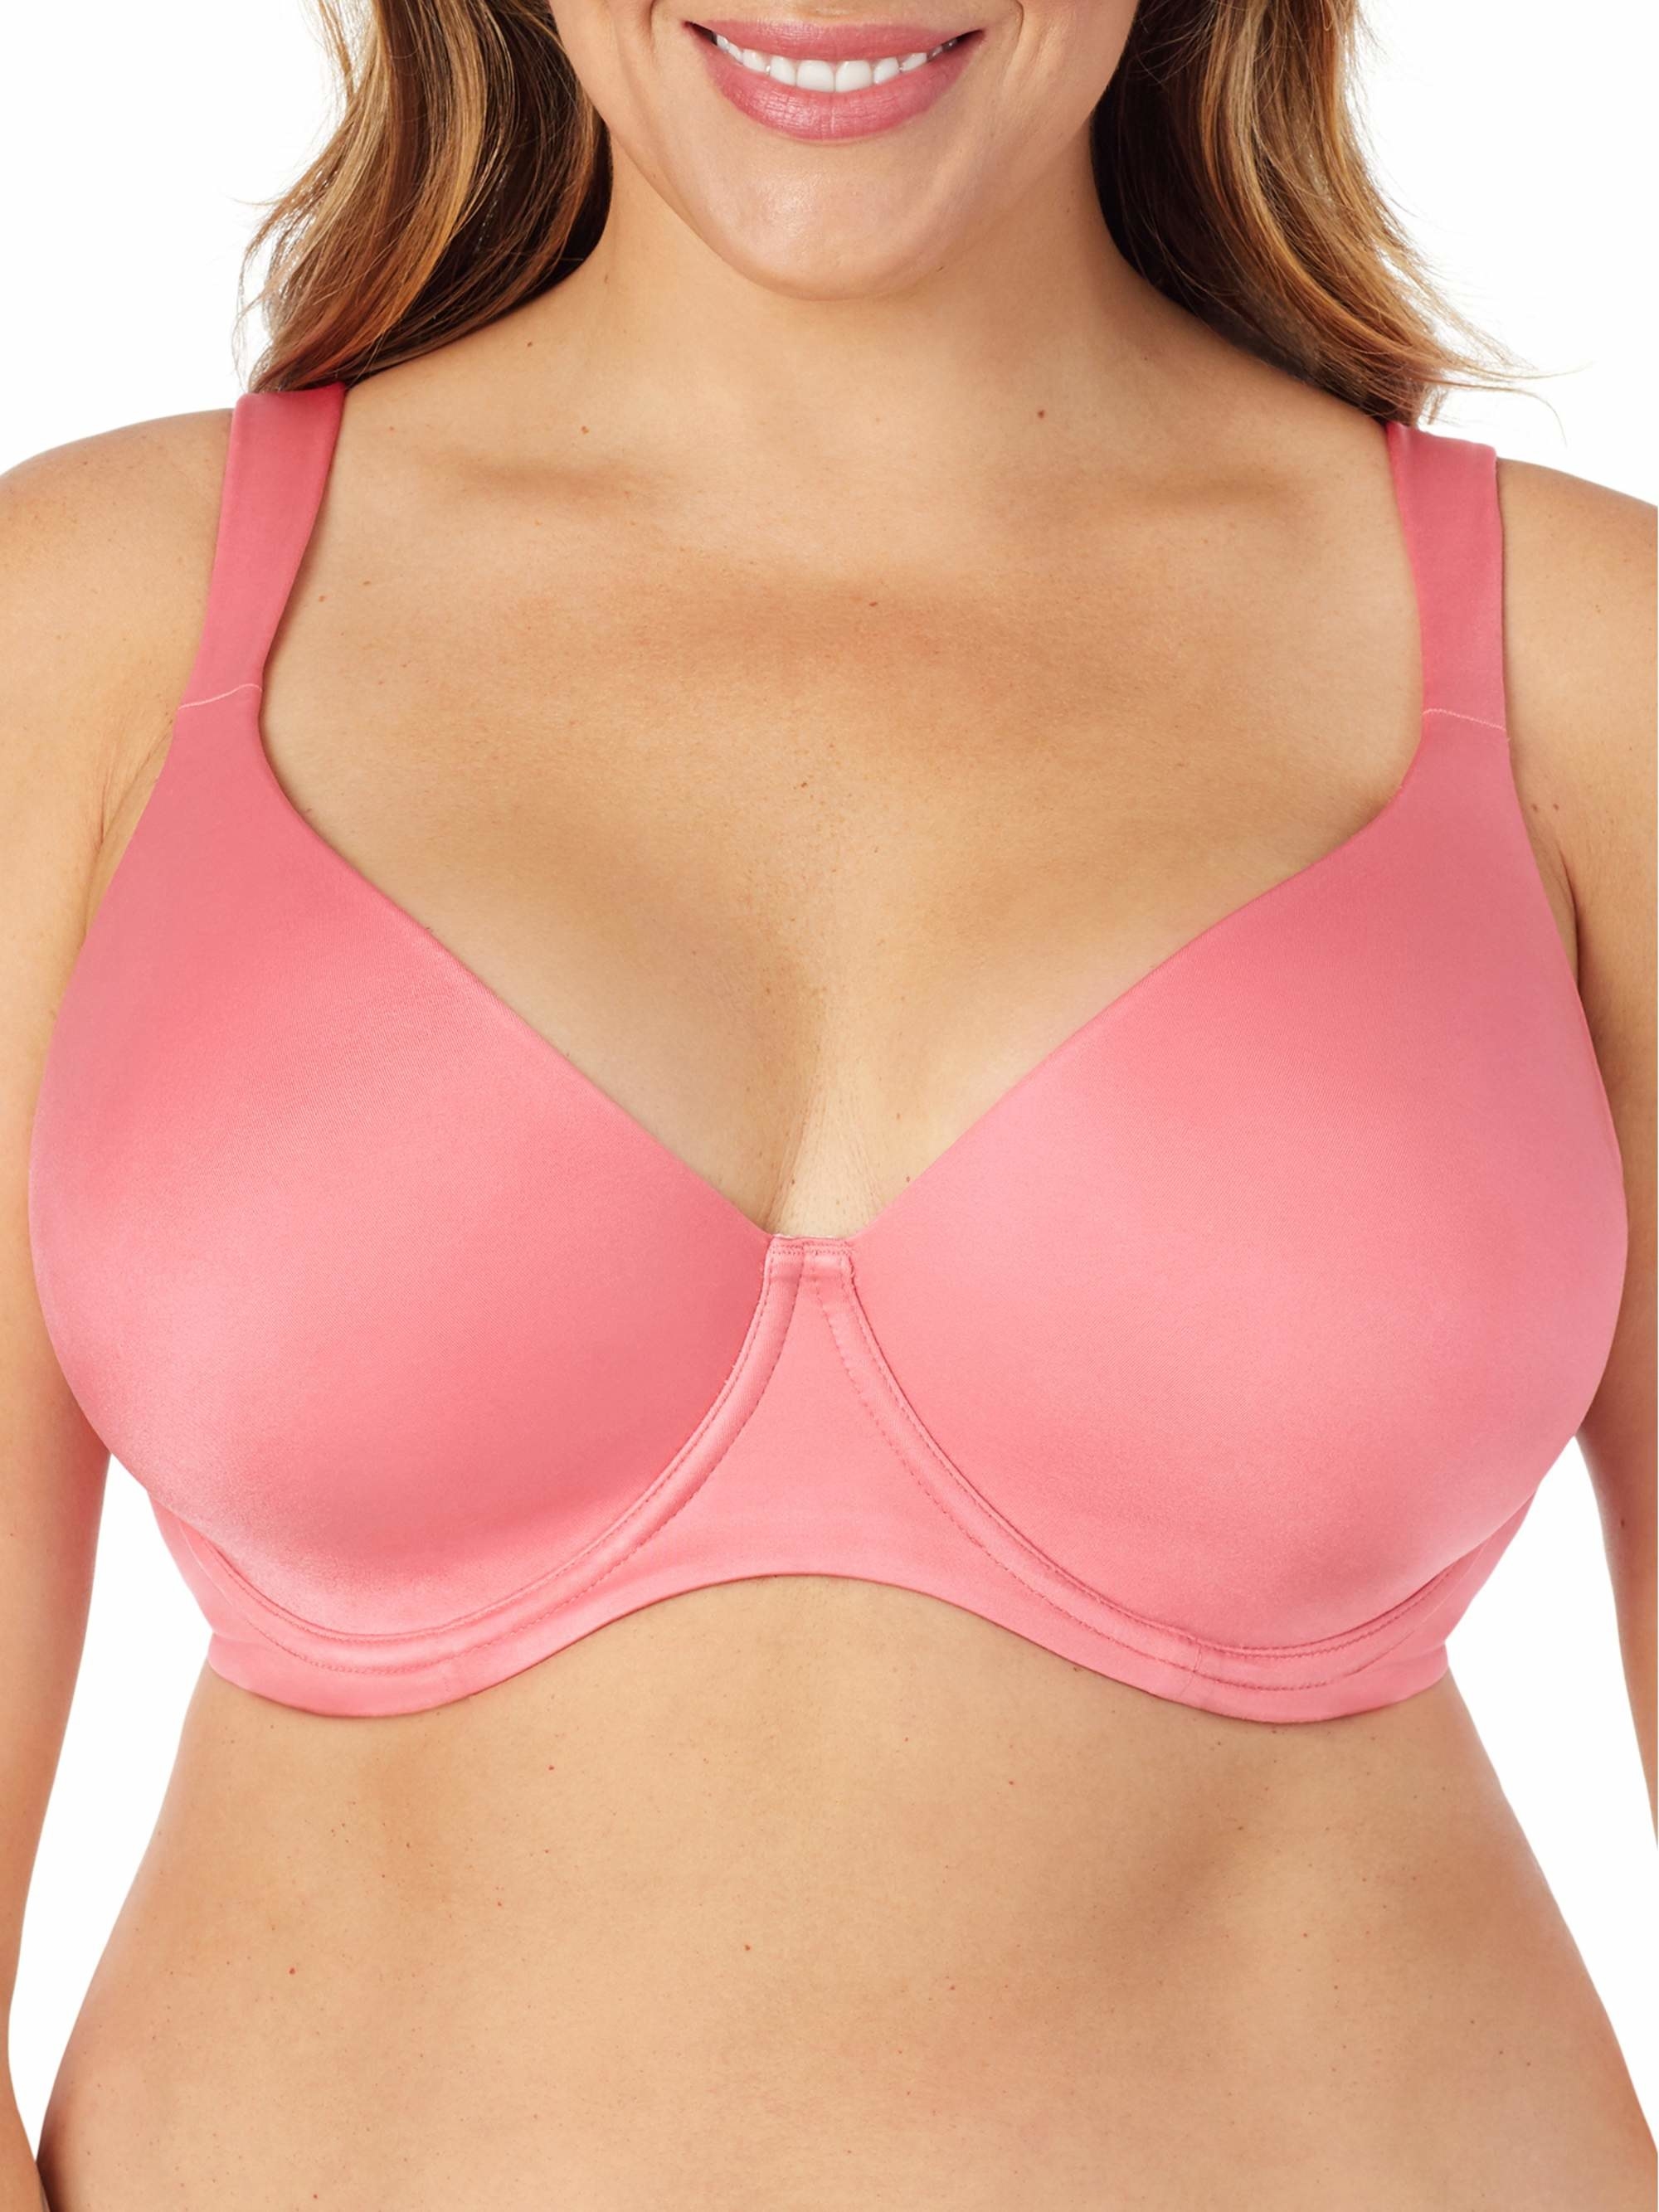 Model wearing the pink sapphire bra